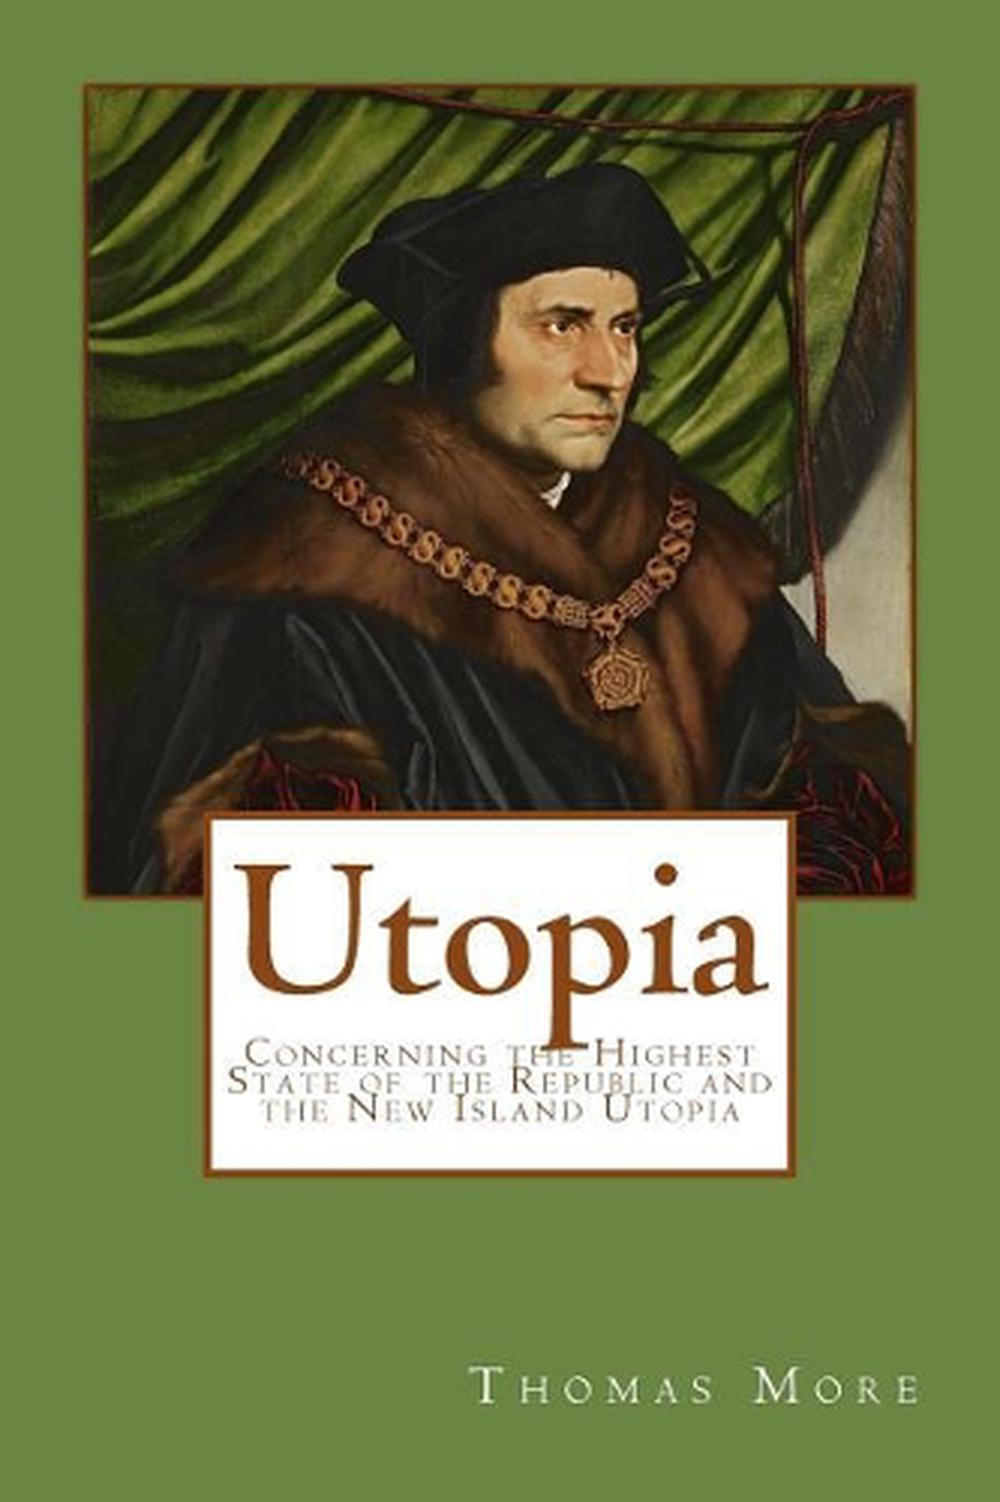 utopia thomas more book 3rd edition